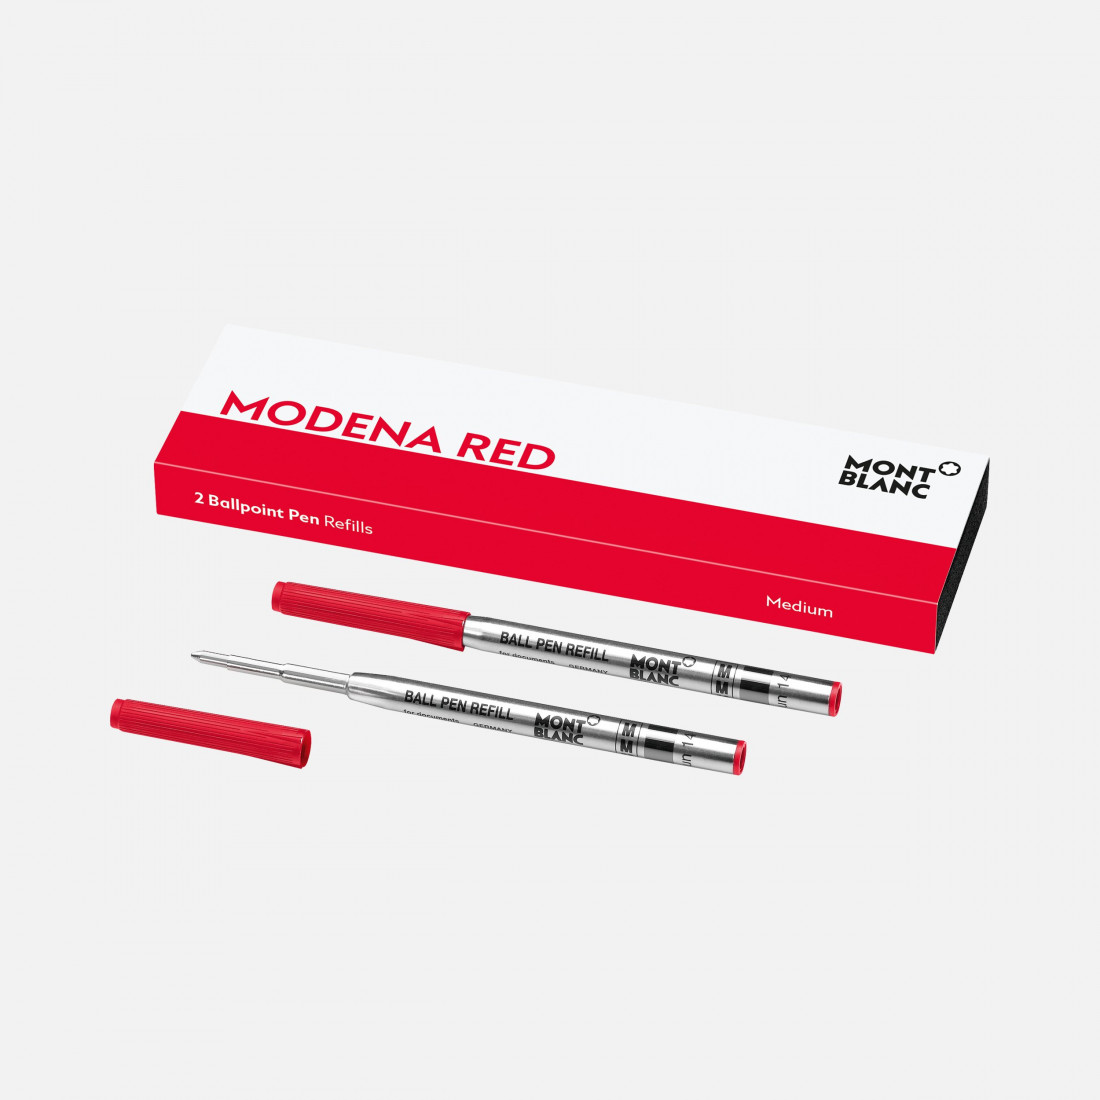 Montblanc 2 Ballpoint Refills Medium, modena red